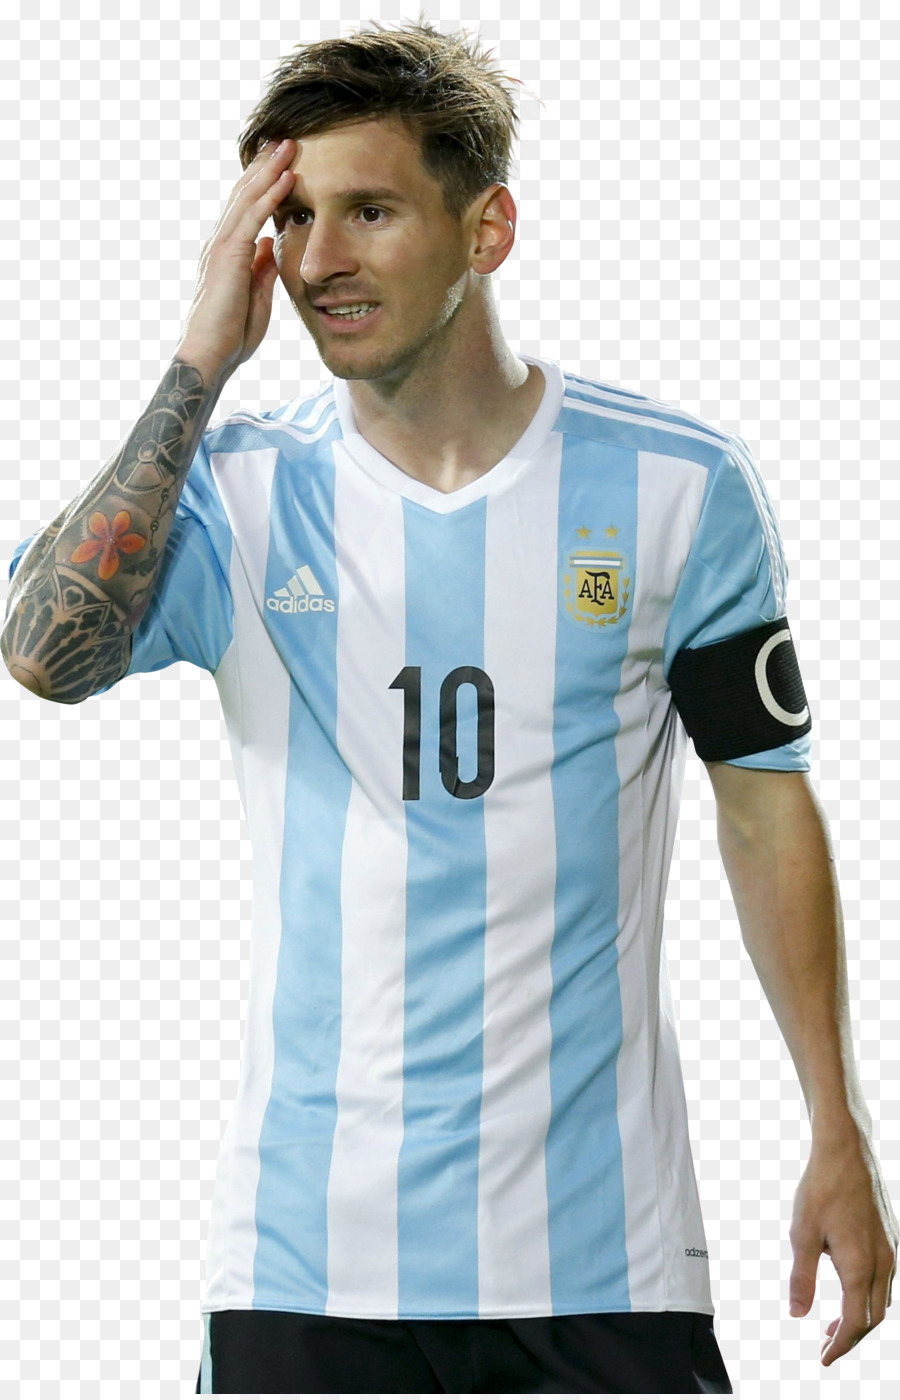 Messi Cartoon png download - 1492*2311 - Free Transparent Alexandre Lacazette png Download. - CleanPNG / KissPNG